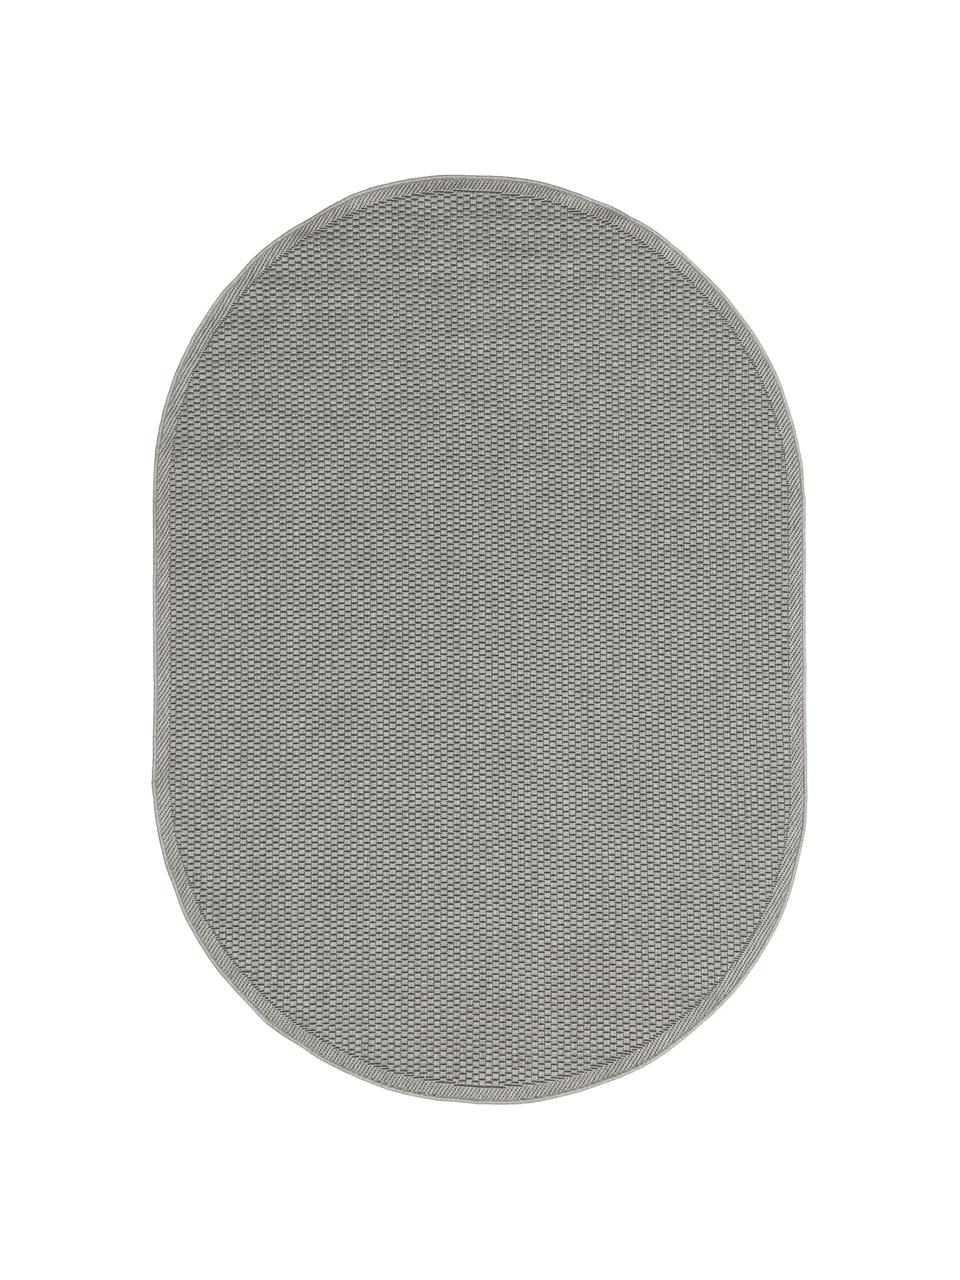 Ovaler In- & Outdoor-Teppich Toronto in Grau, 100% Polypropylen, Grau, B 160 x L 230 cm (Grösse M)